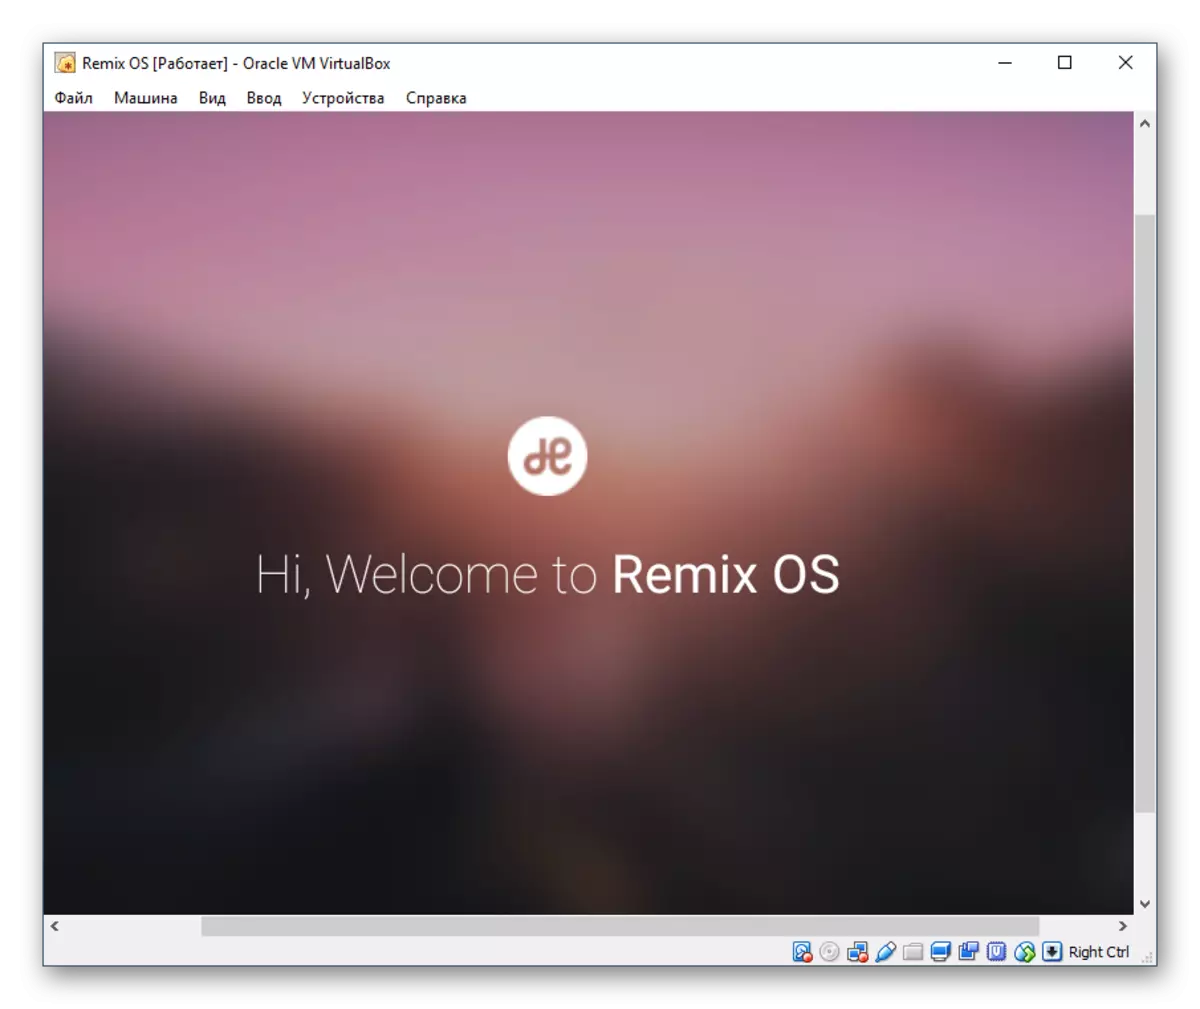 Ucapan Remix OS di VirtualBox